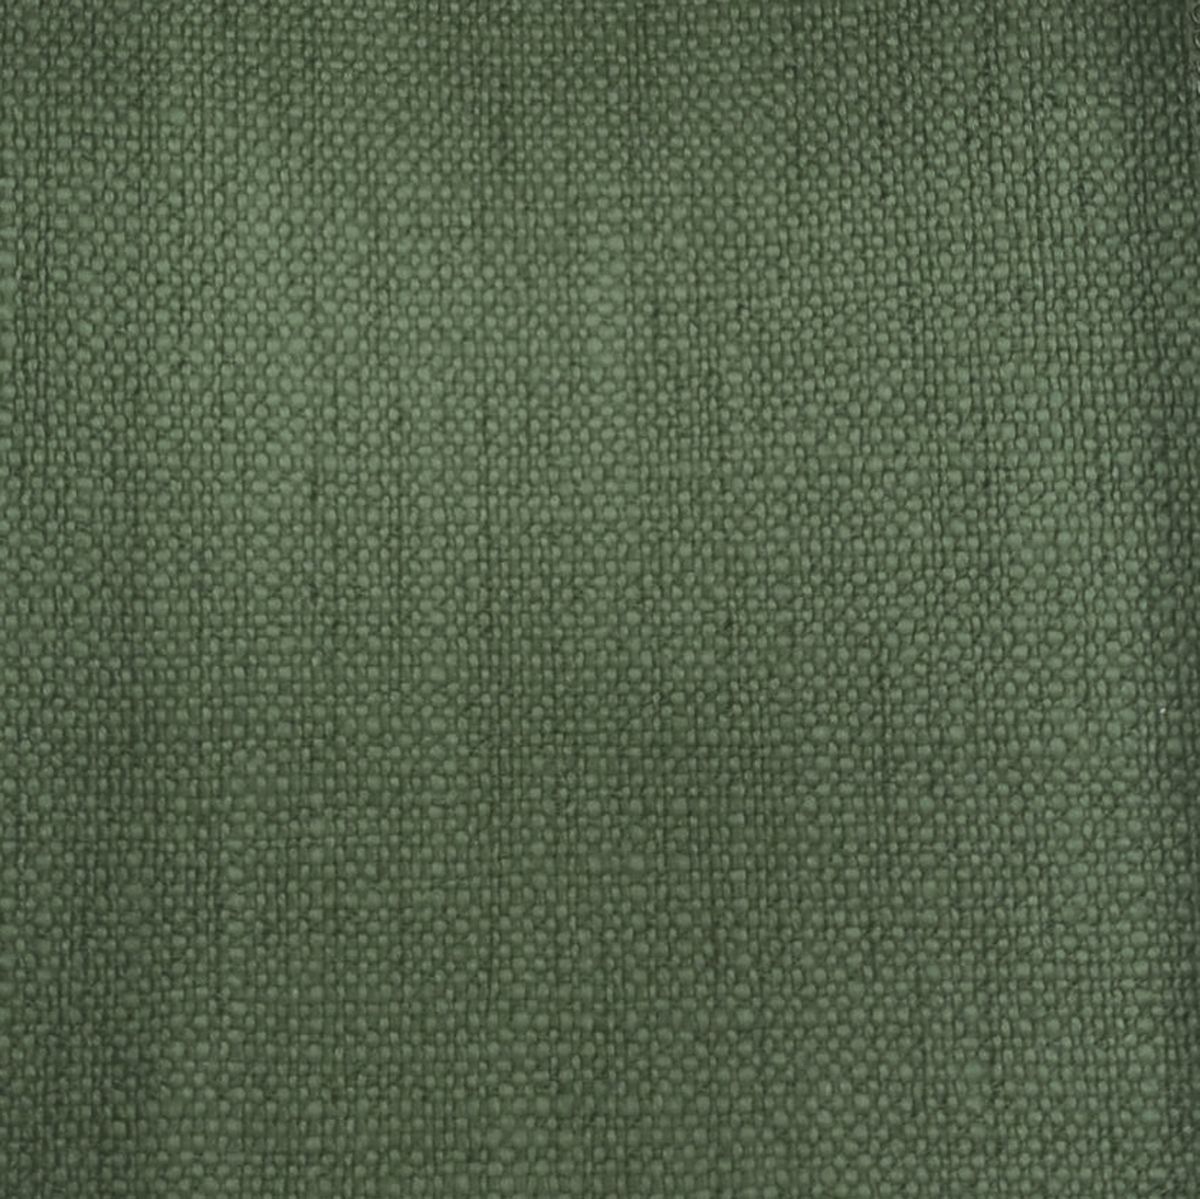 Trento Olive Fabric by Voyage Maison